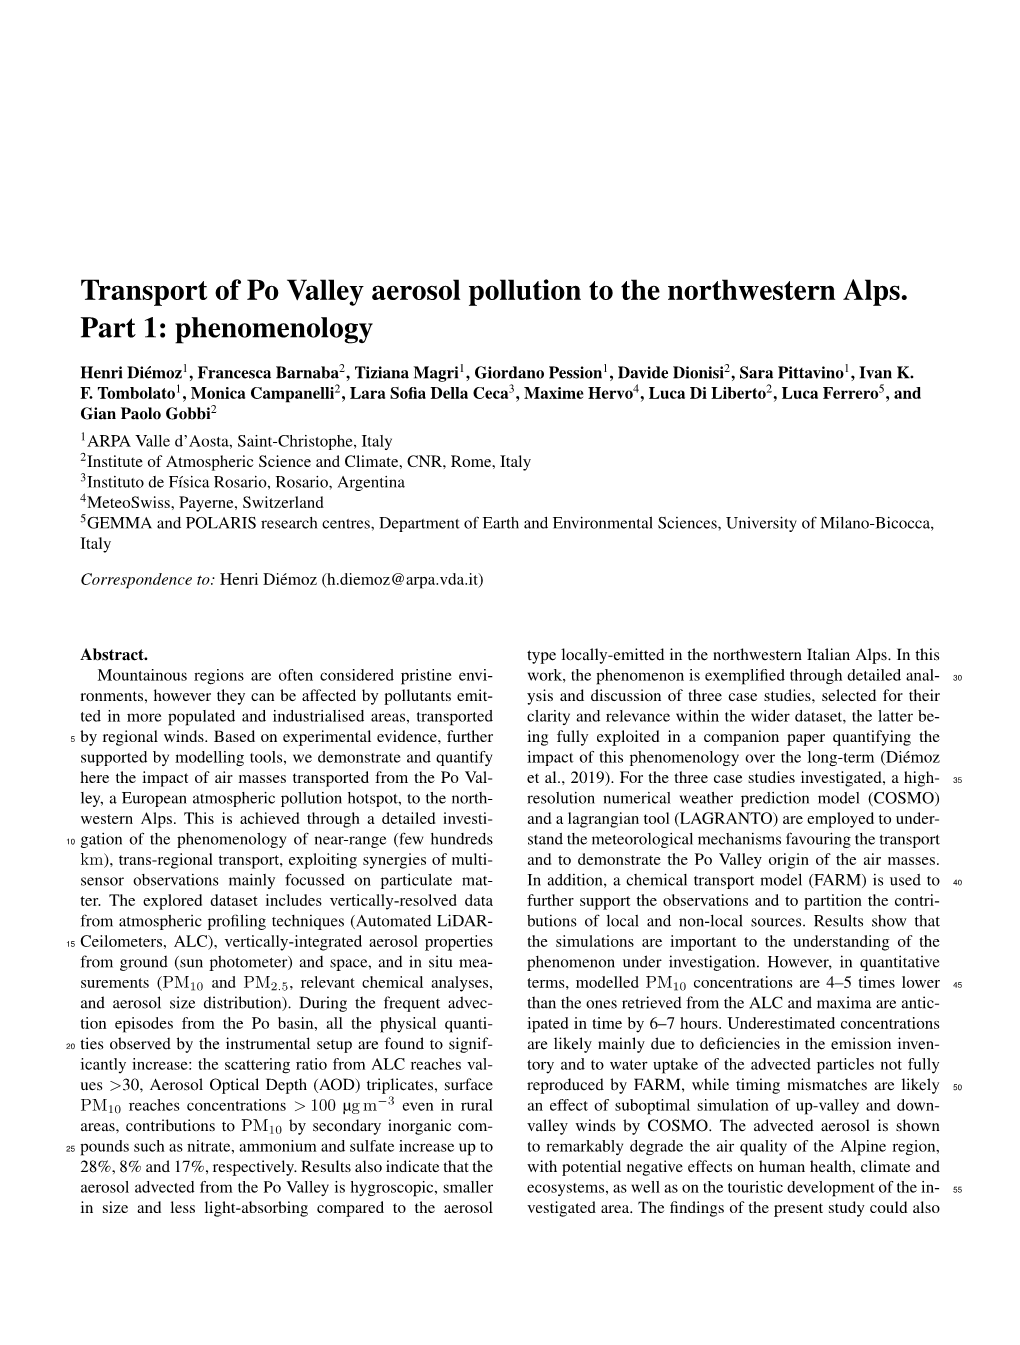 Transport of Po Valley Aerosol Pollution to the Northwestern Alps. Part 1: Phenomenology